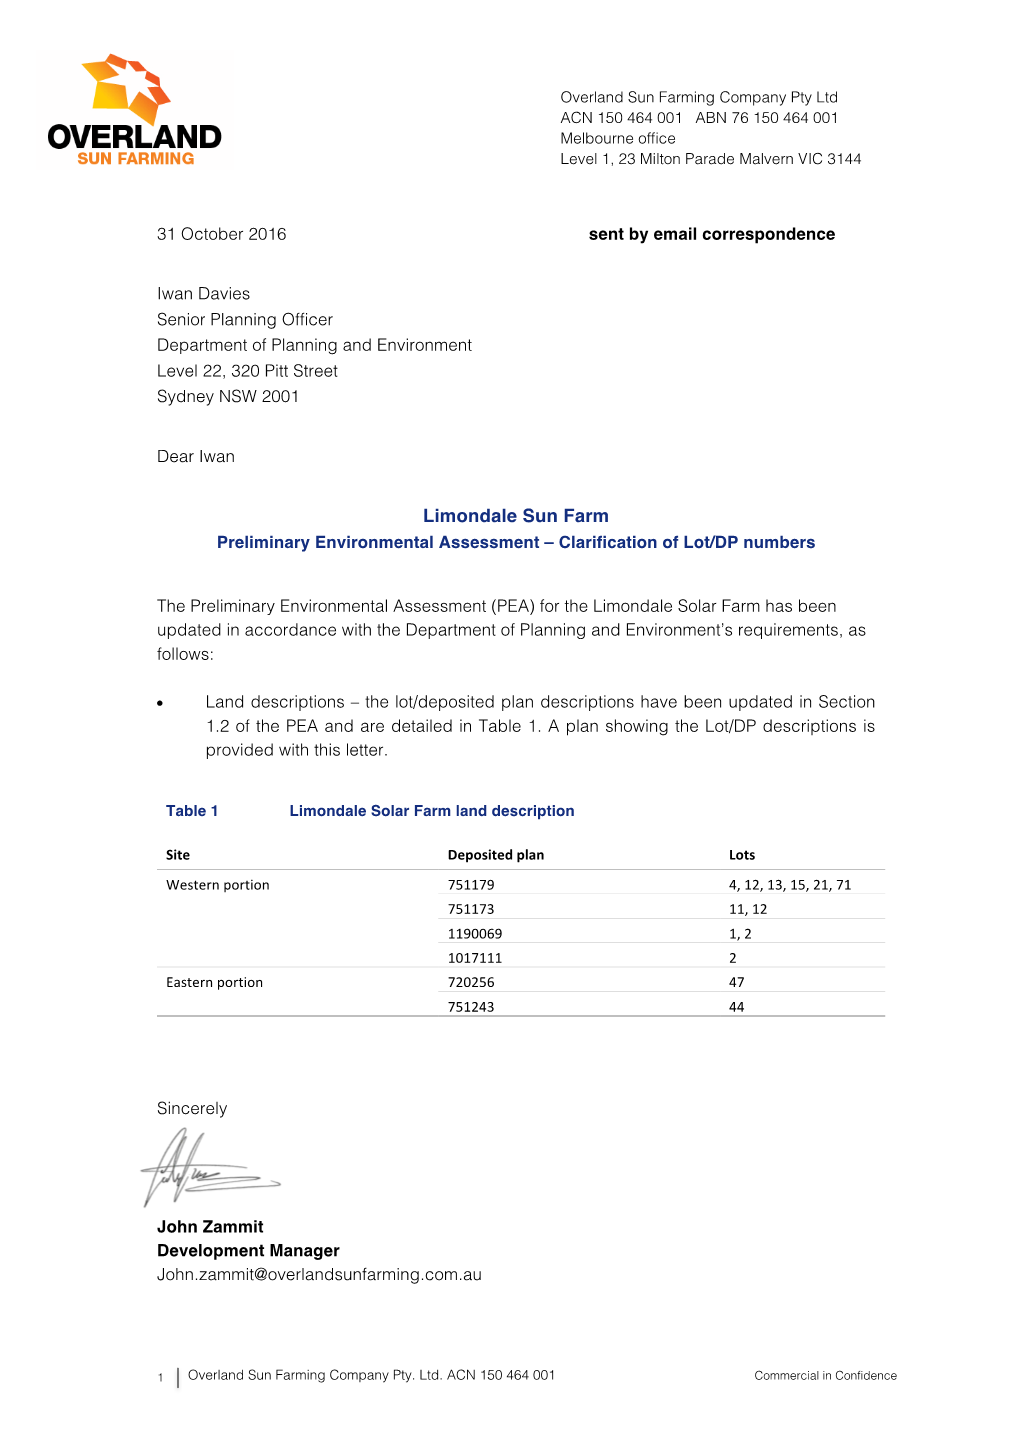 Limondale Sun Farm Preliminary Environmental Assessment – Clarification of Lot/DP Numbers